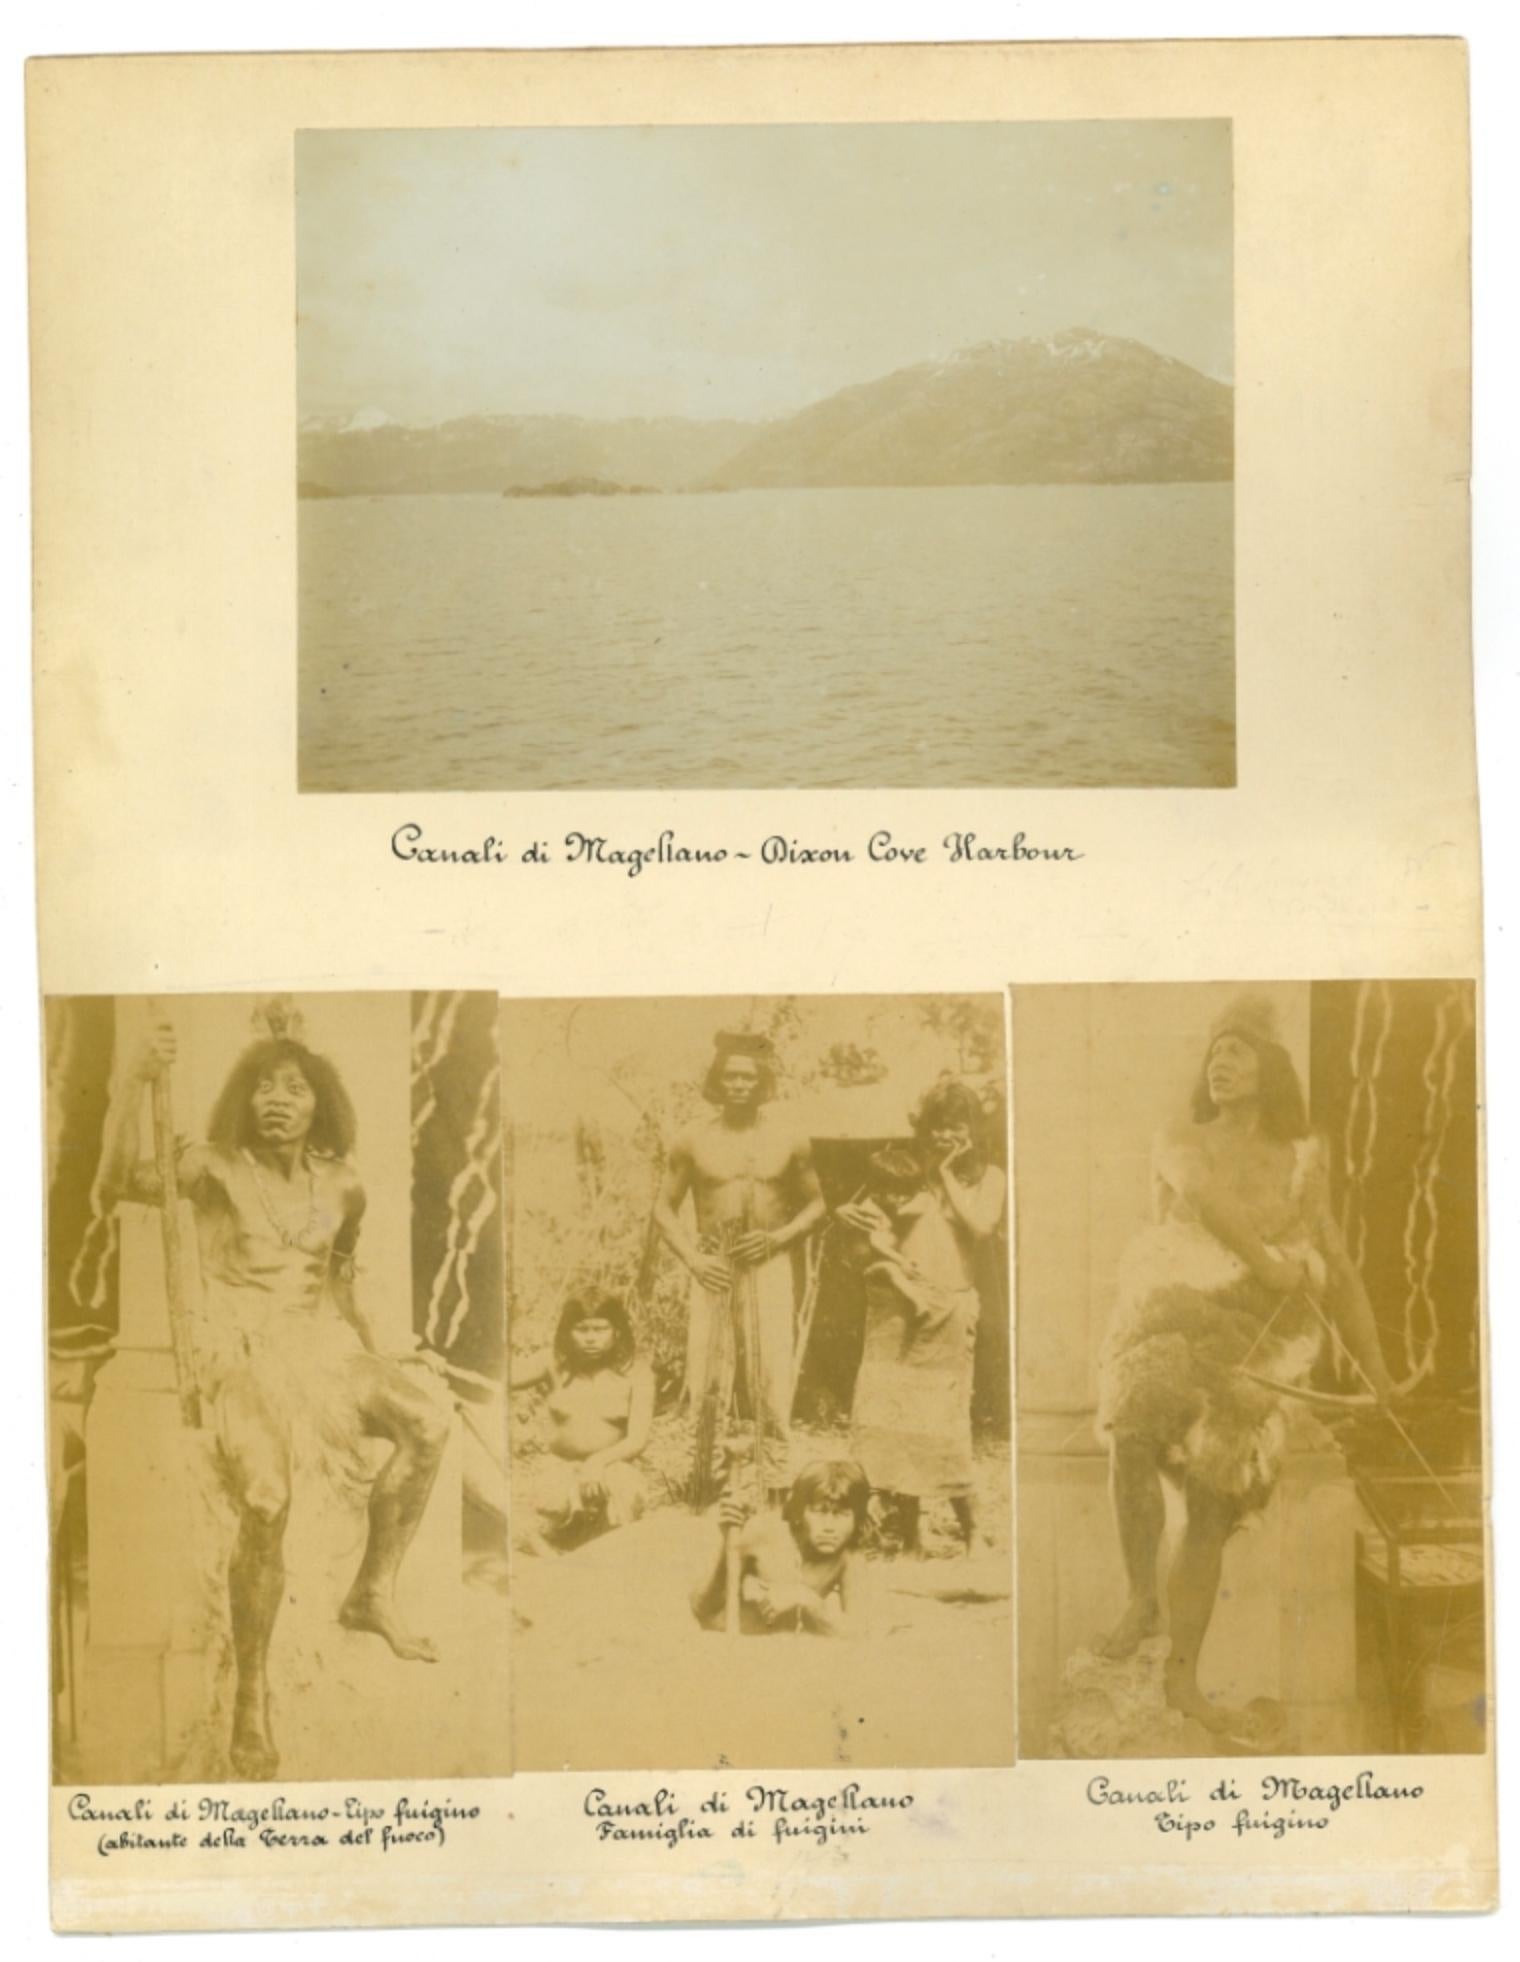 Unknown Landscape Photograph - Ancient Views of the Strait of Magellan - Original Vintage Photo - 1880s